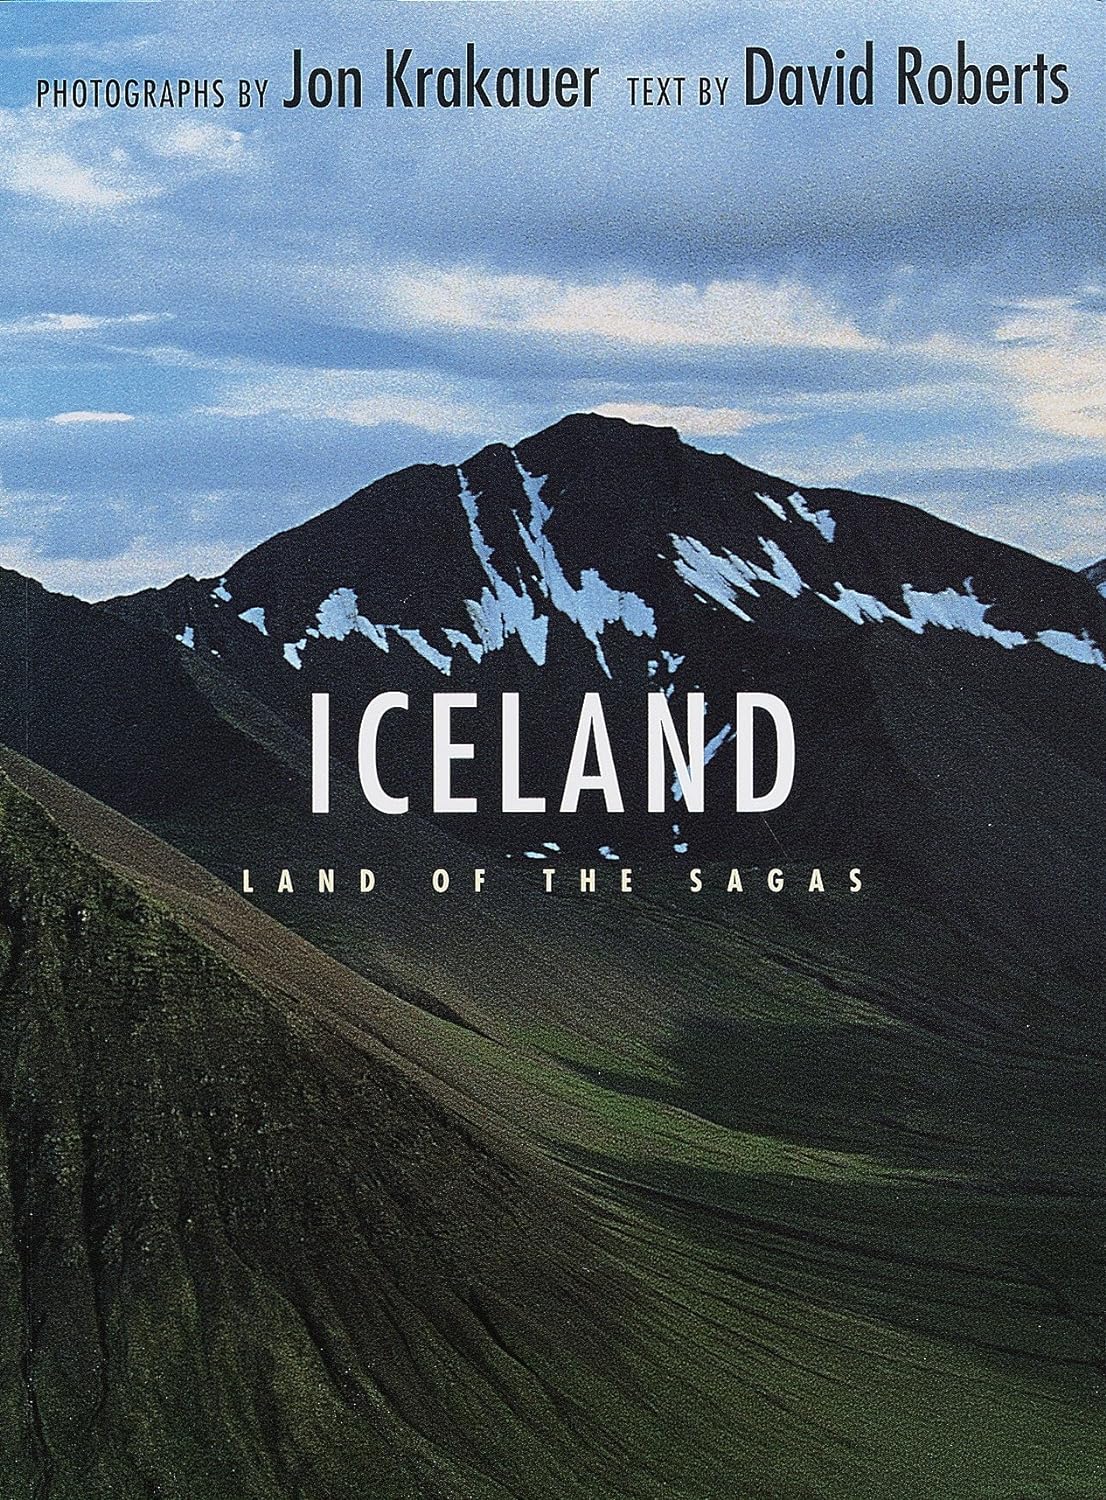 Iceland- Land of the Sagas by jon krakauer